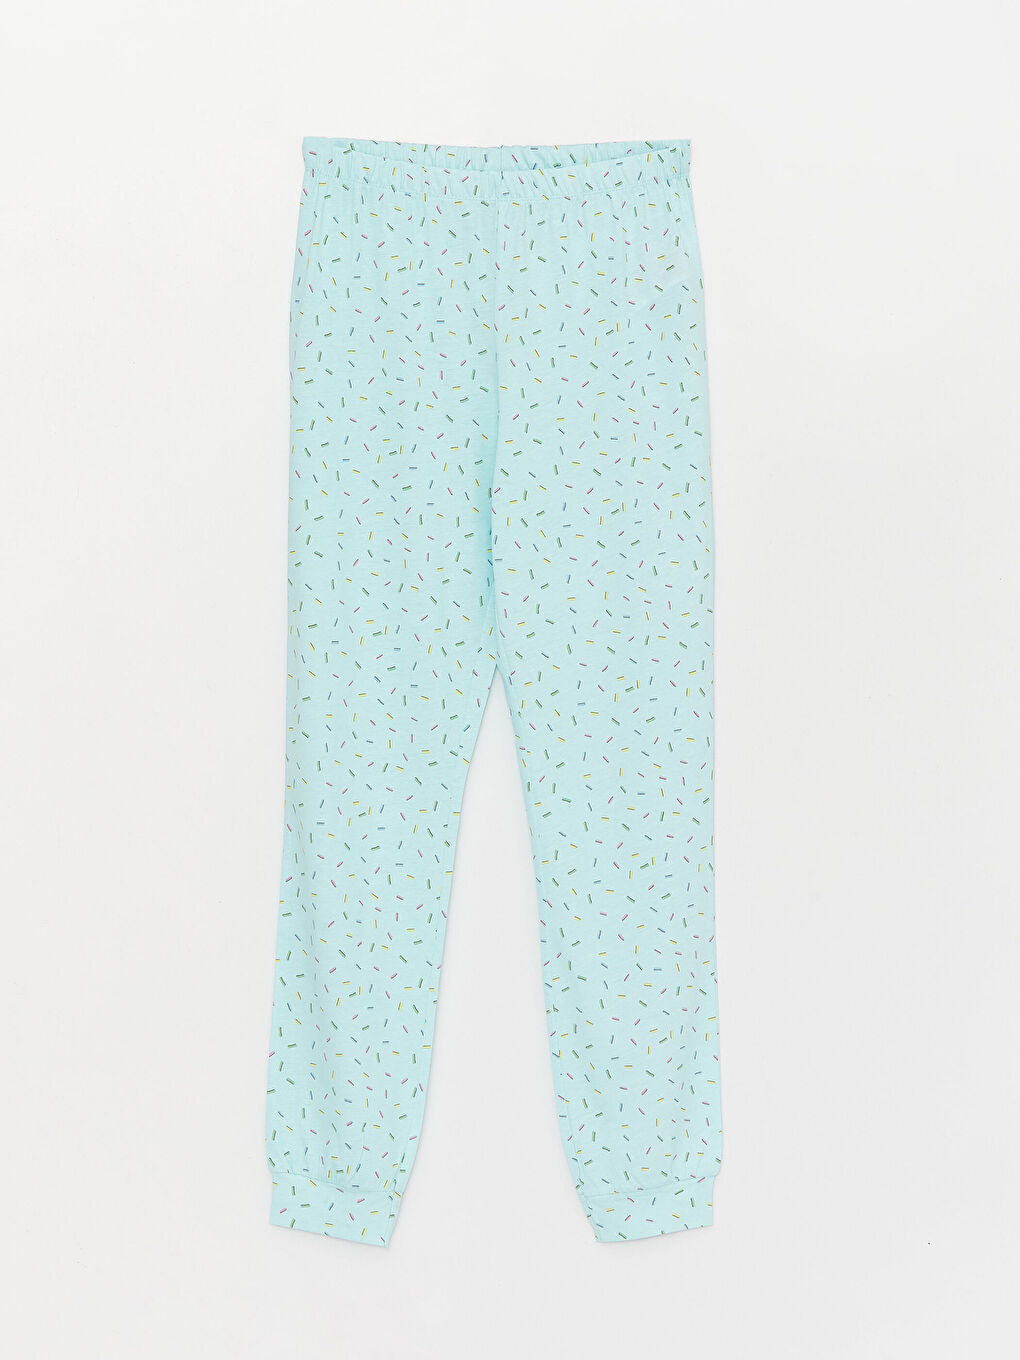 Crew Neck Printed Short Sleeve Women Pajamas Set